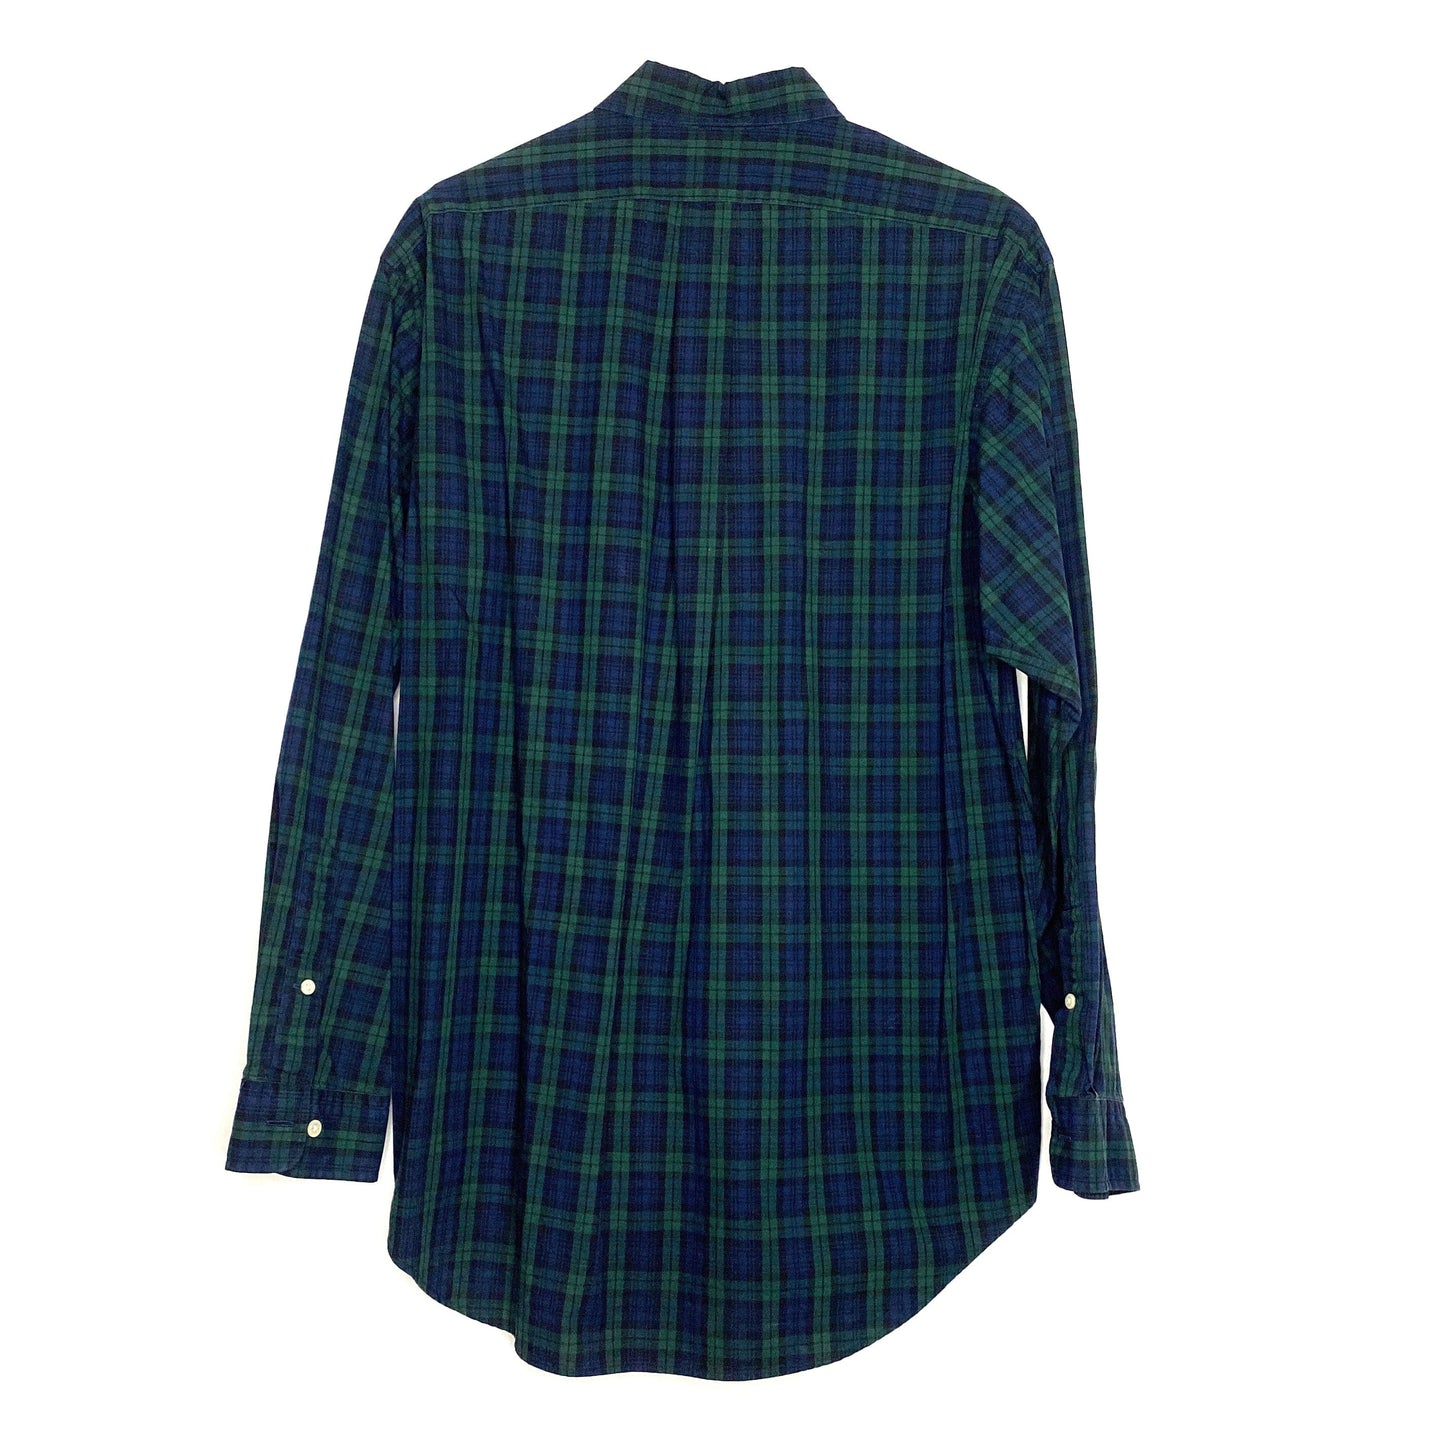 Ralph Lauren Mens Size 16 34/35 M Blue Green Plaid Yarmouth Dress Shirt Button-Up L/s